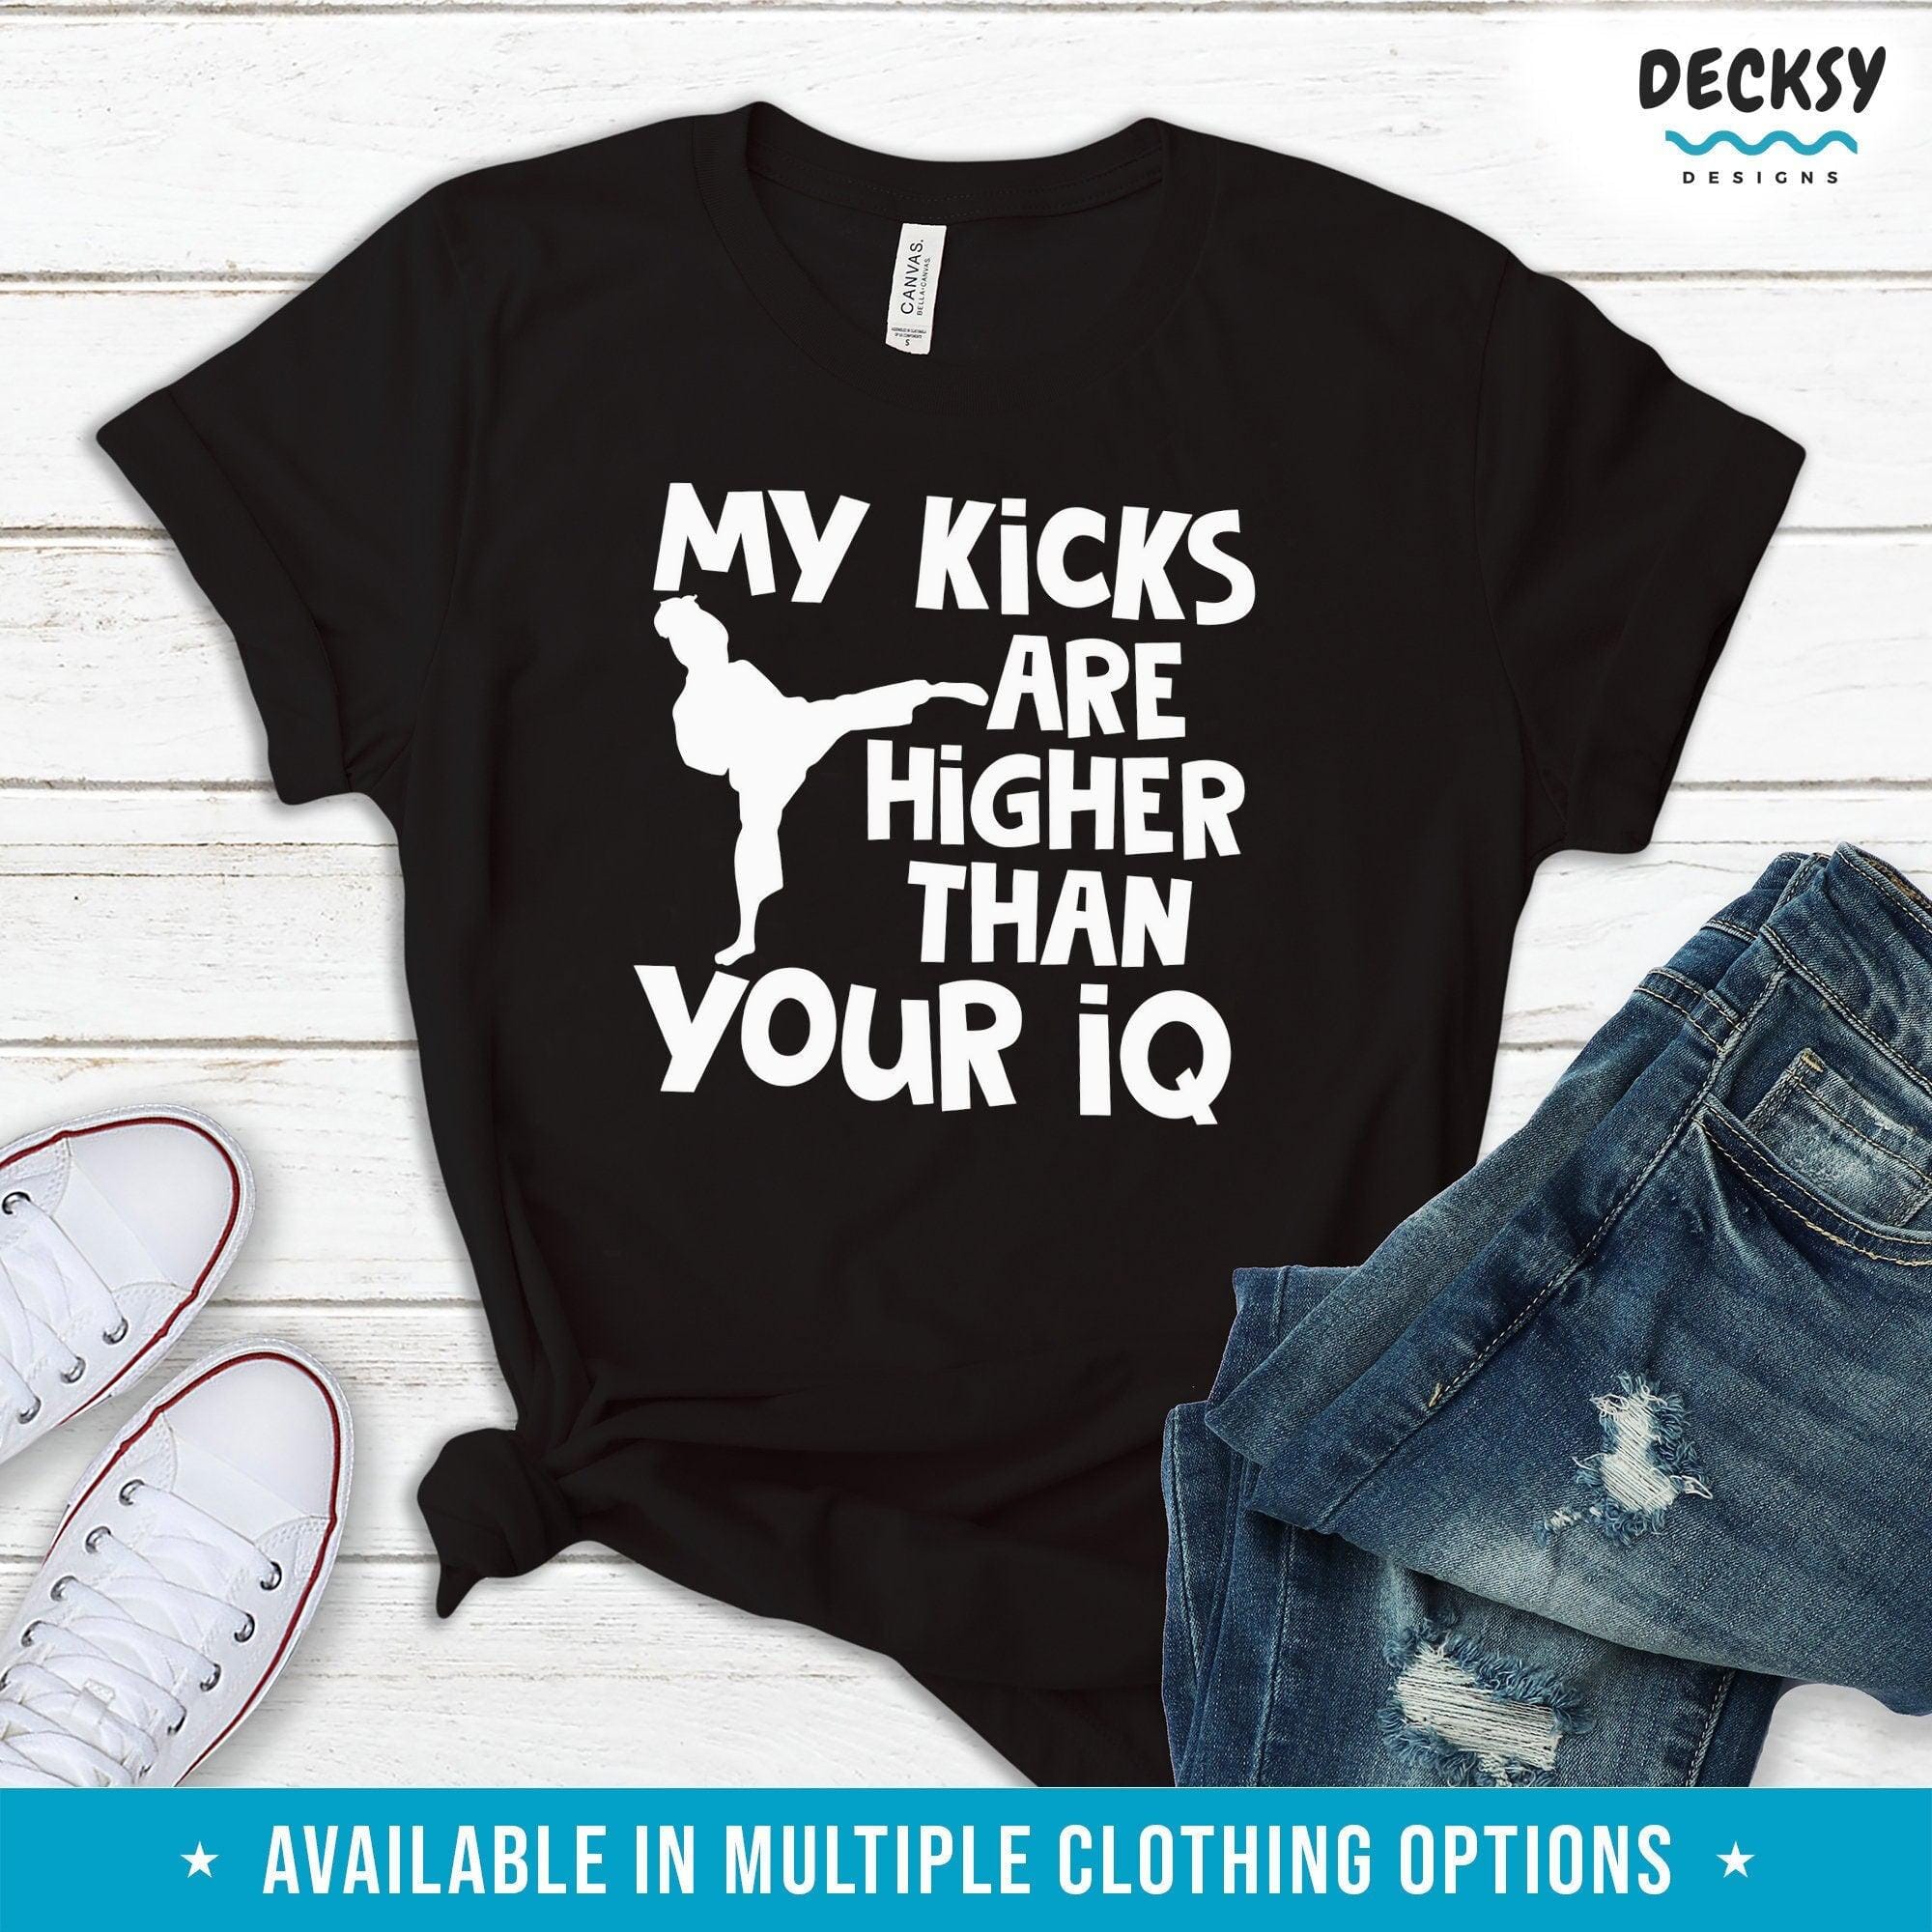 Kickboxing Tshirt, Karate Champion Gift-Clothing:Gender-Neutral Adult Clothing:Tops & Tees:T-shirts:Graphic Tees-DecksyDesigns